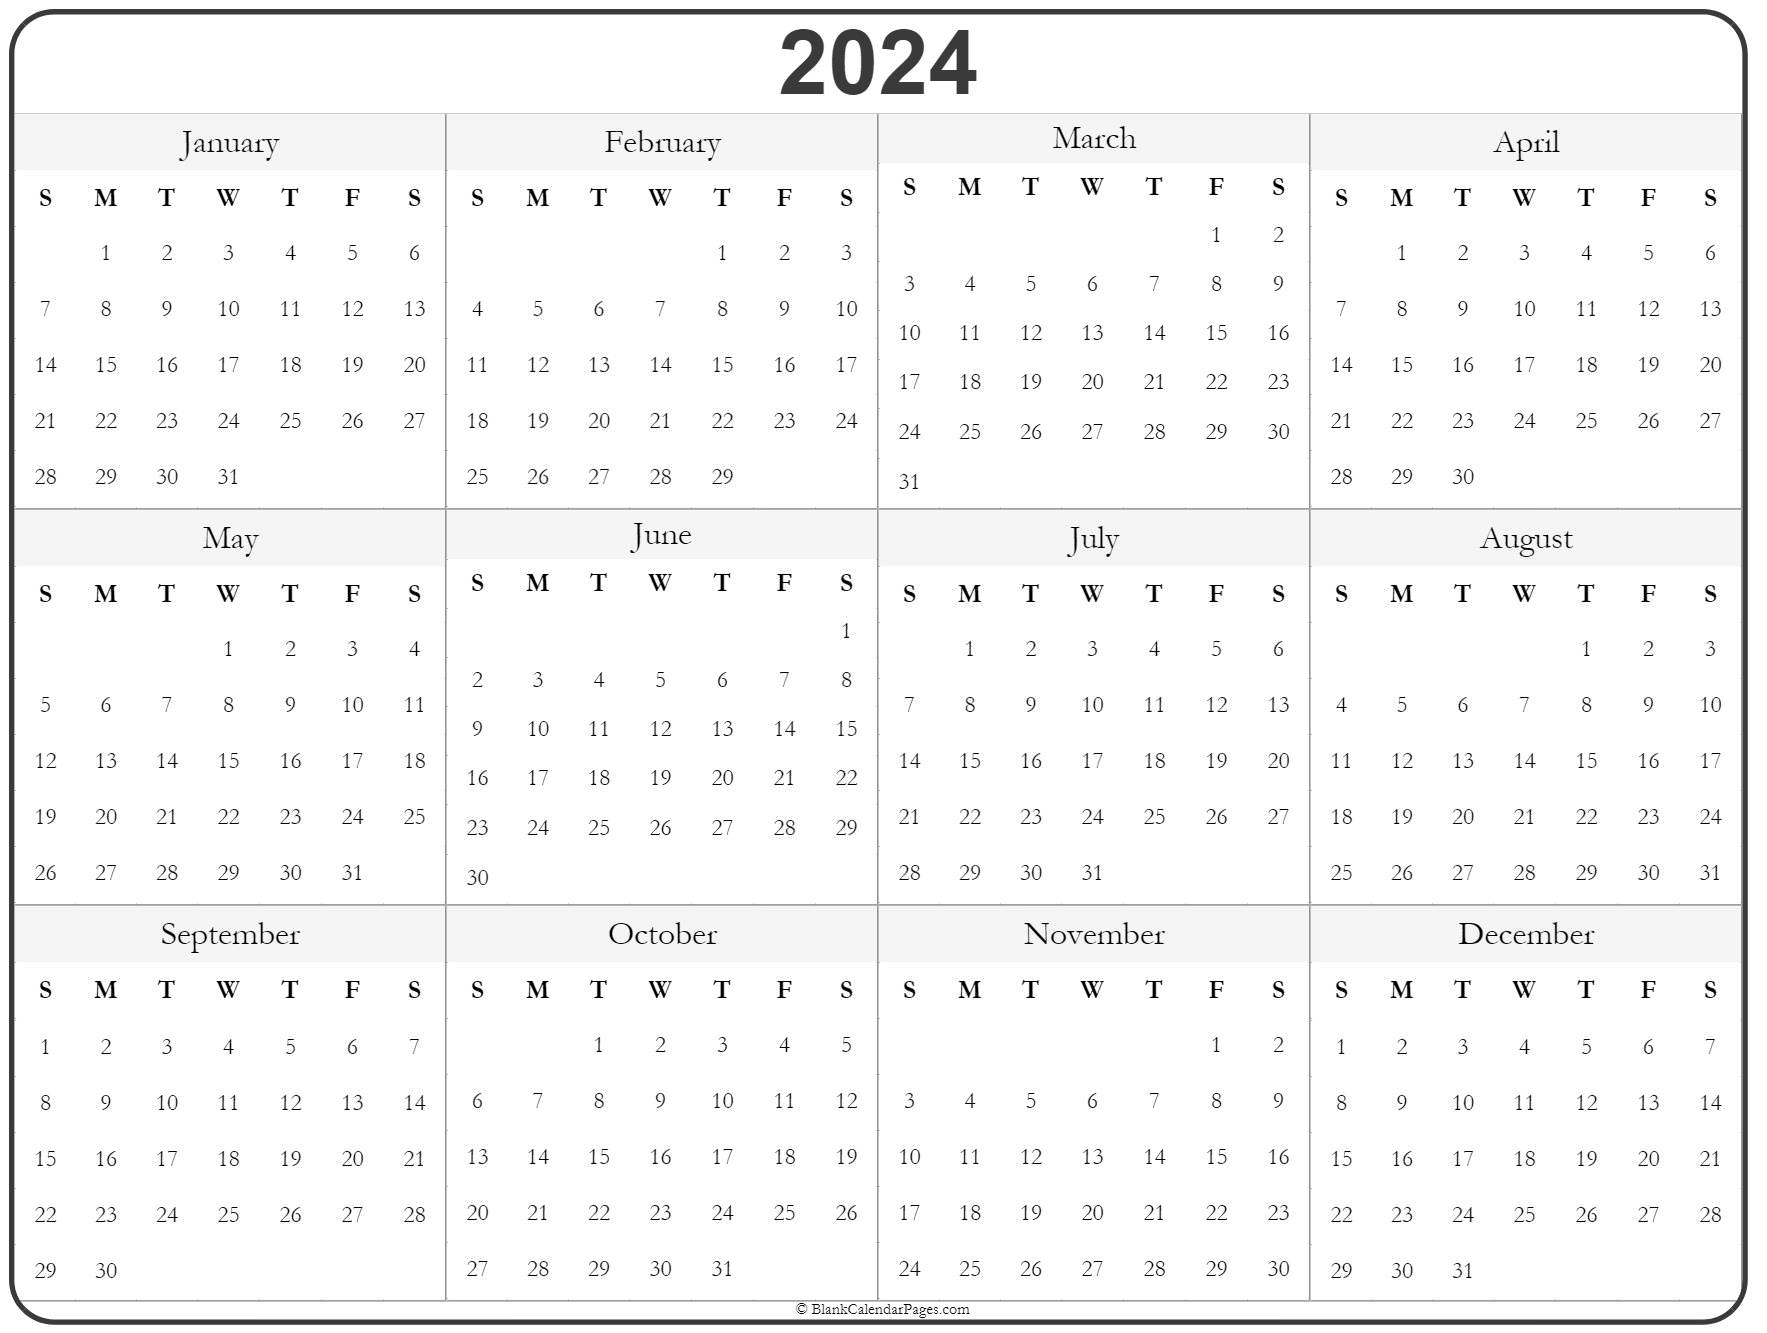 Yearly Calendar 2024 Calendar Quickly 2024 Yearly Calendar - Free Printable 2024 Calendar Yearly